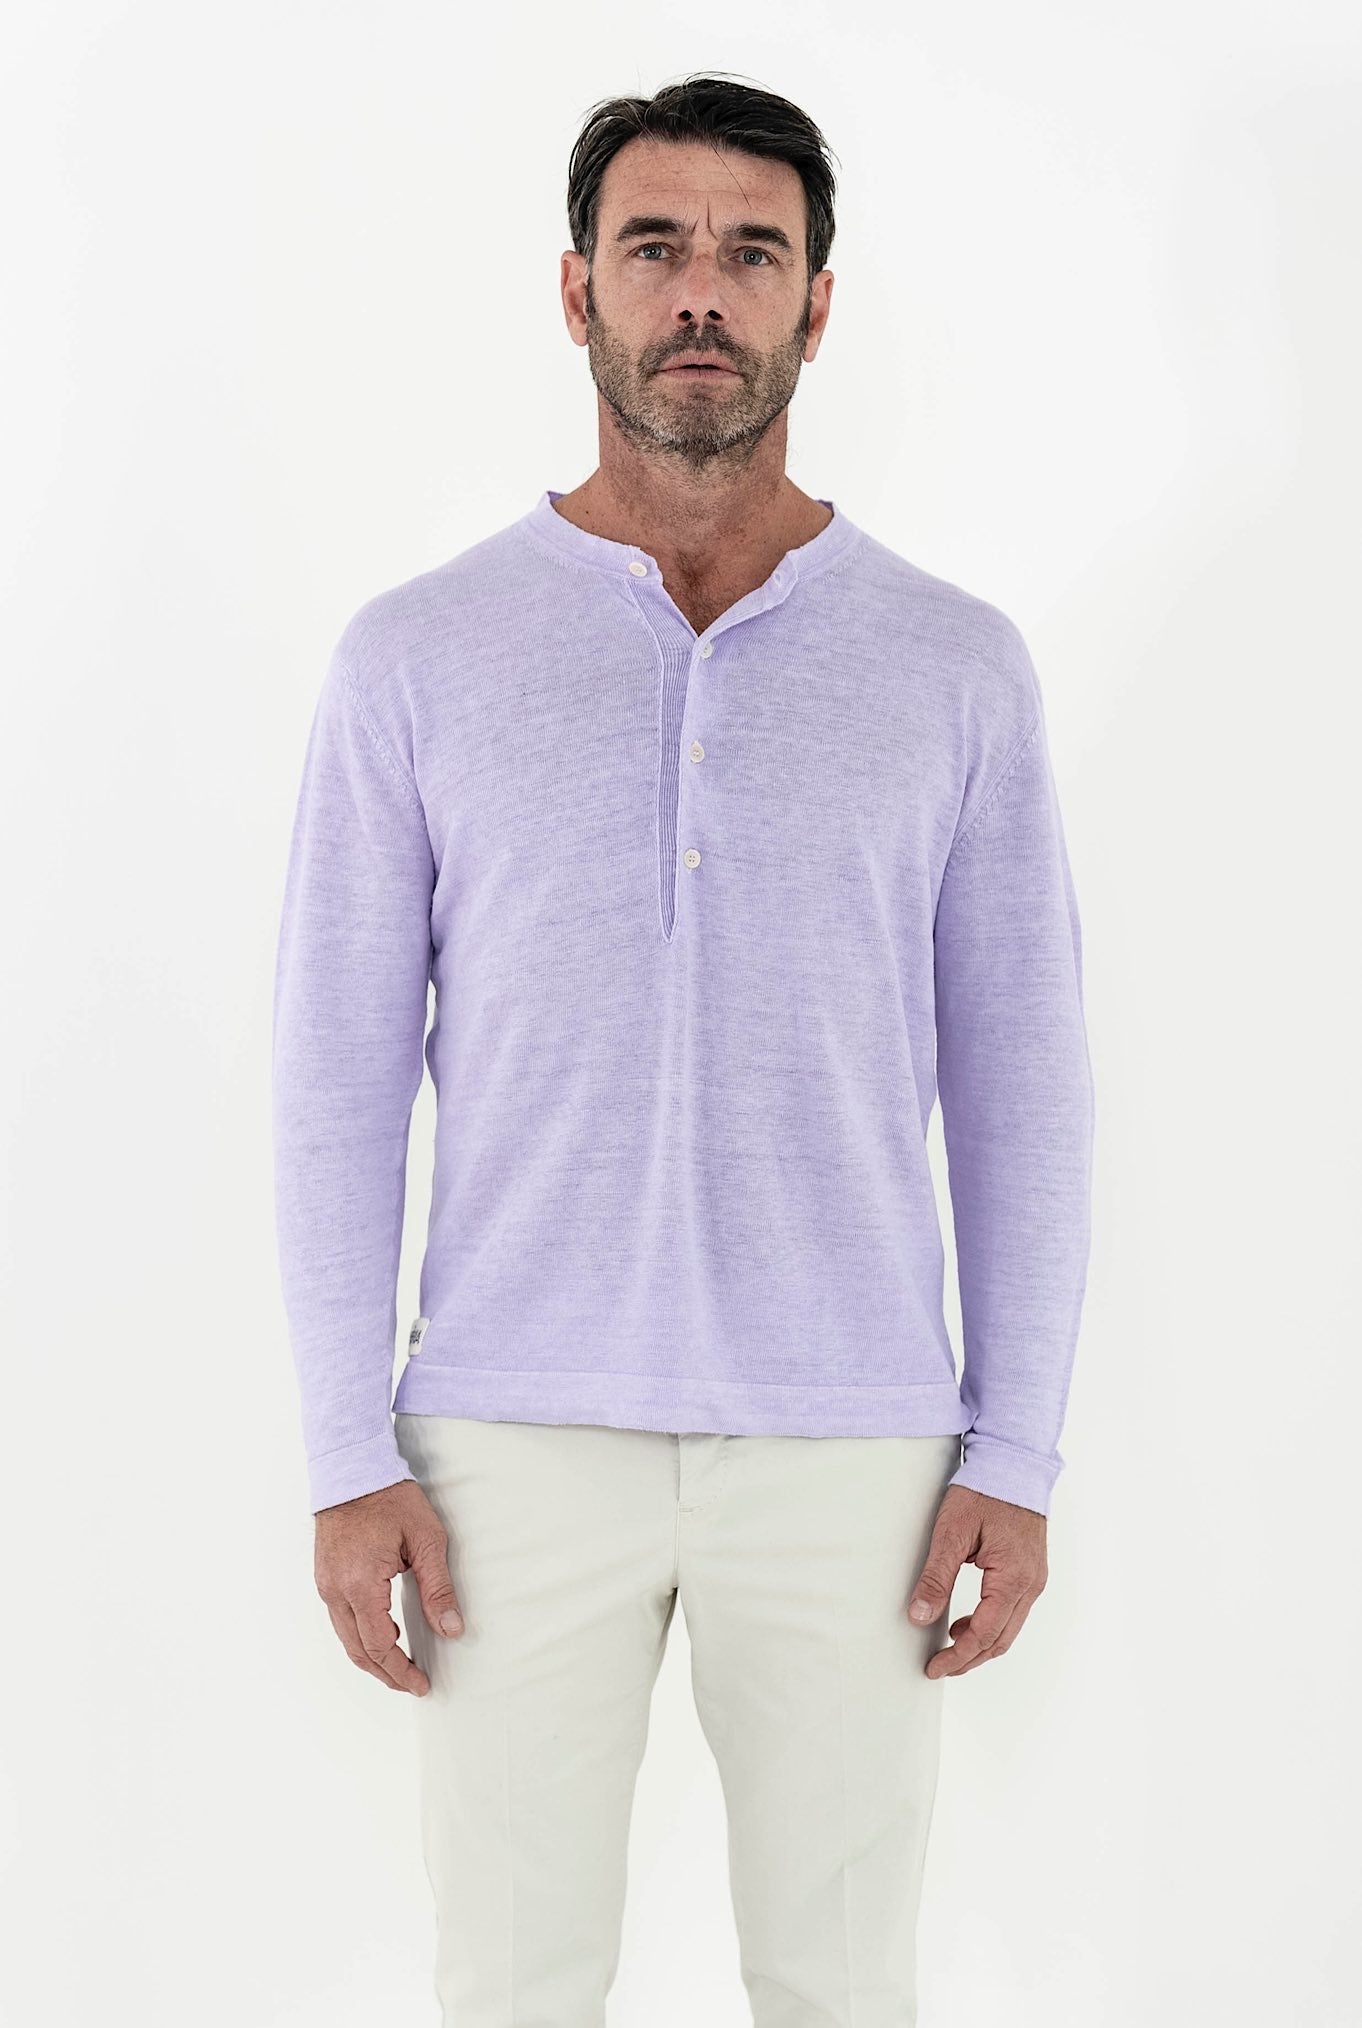 MATEMA Long Sleeve Seraph Shirt in Lilac Linen